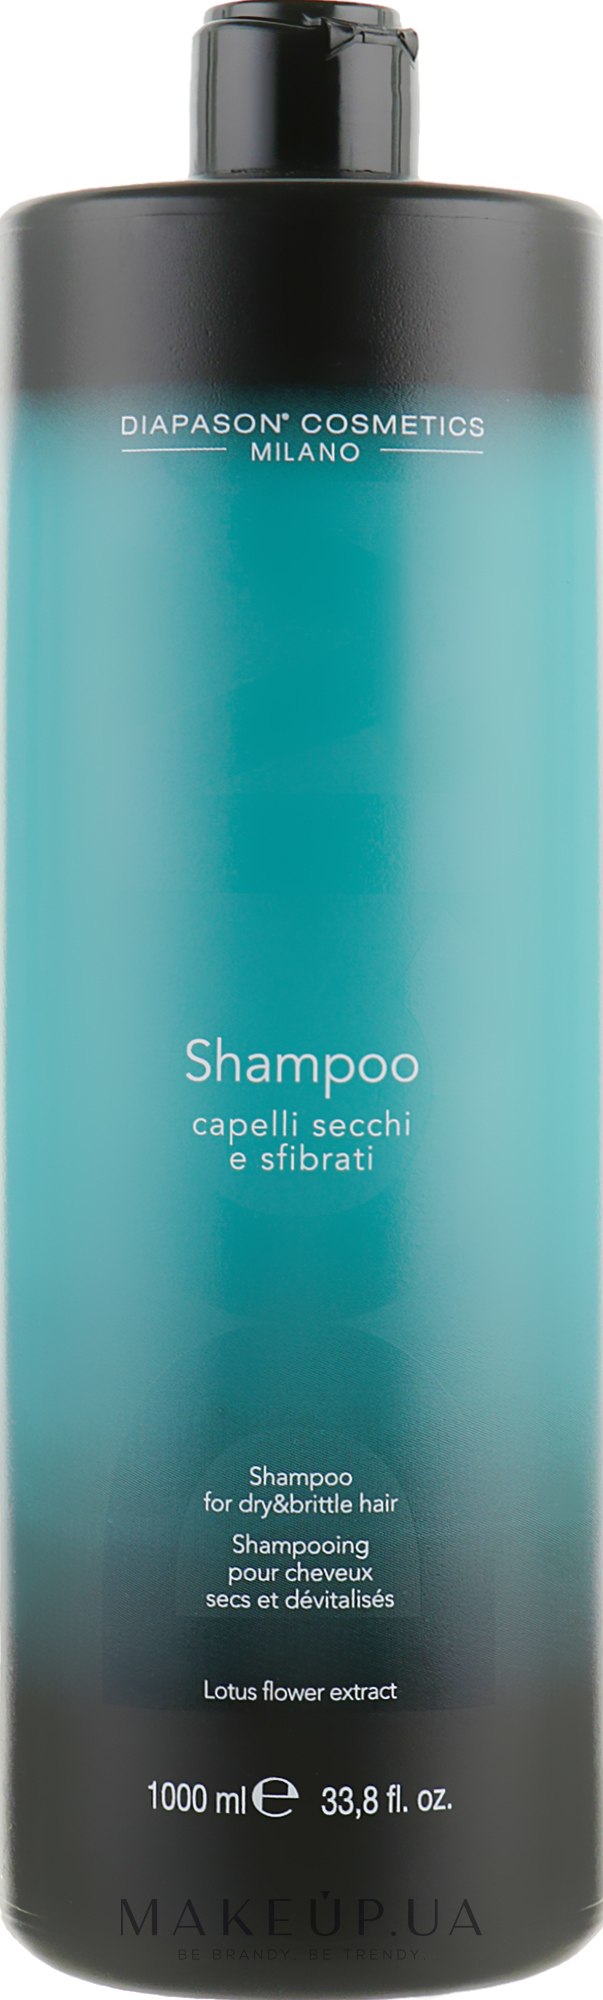 Восстанавливающий шампунь для сухих и поврежденных волос - DCM Shampoo For Dry And Brittle Hair — фото 1000ml